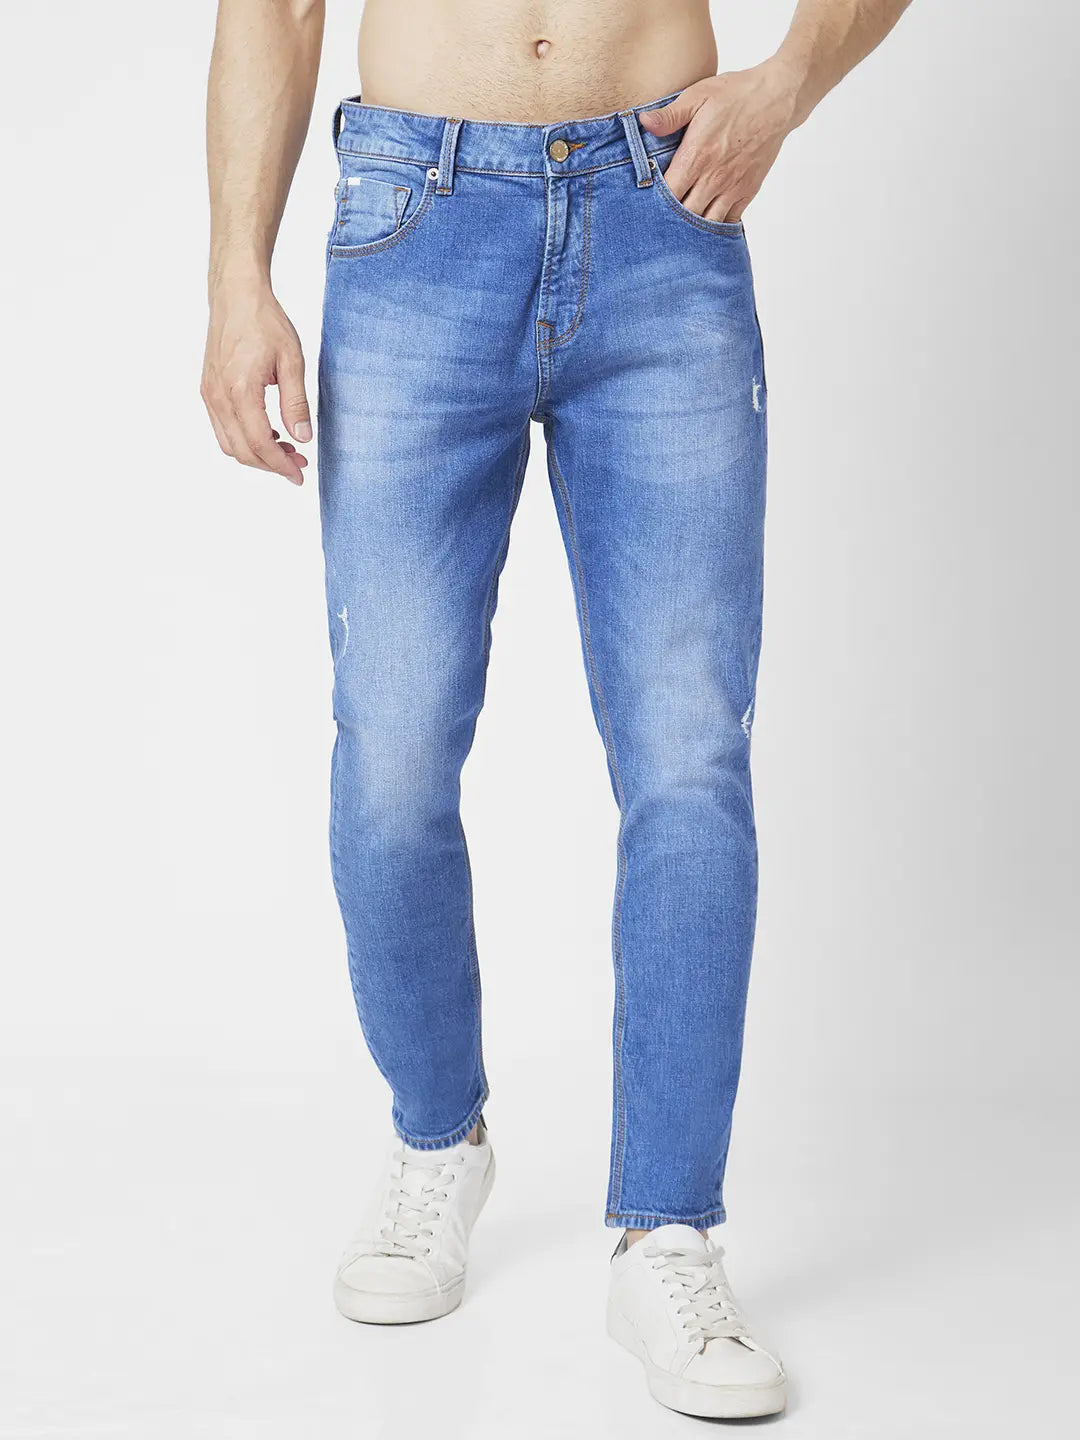 Buy Online|Spykar Mid Rise Regular Fit Blue Jeans For Men